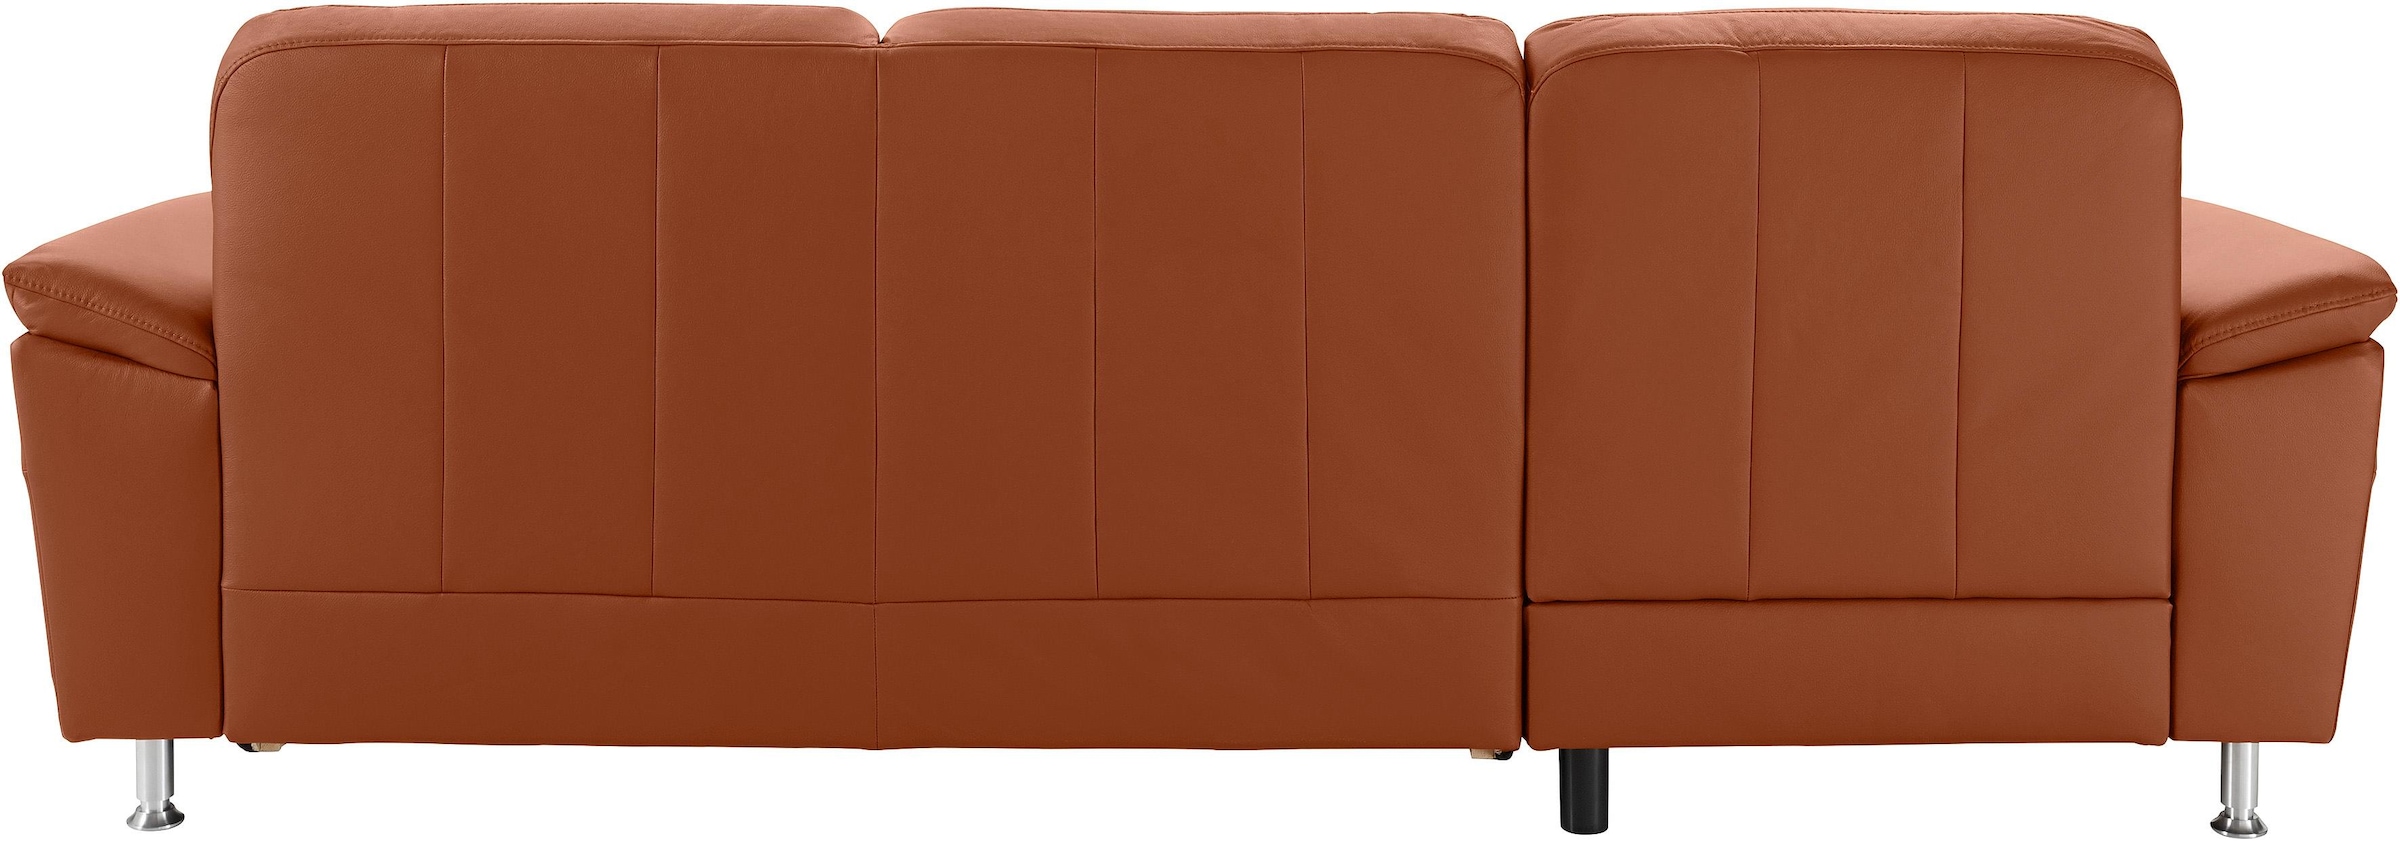 exxpo - sofa fashion Ecksofa »Castello, L-Form«, wahlweise mit Bettfunktion